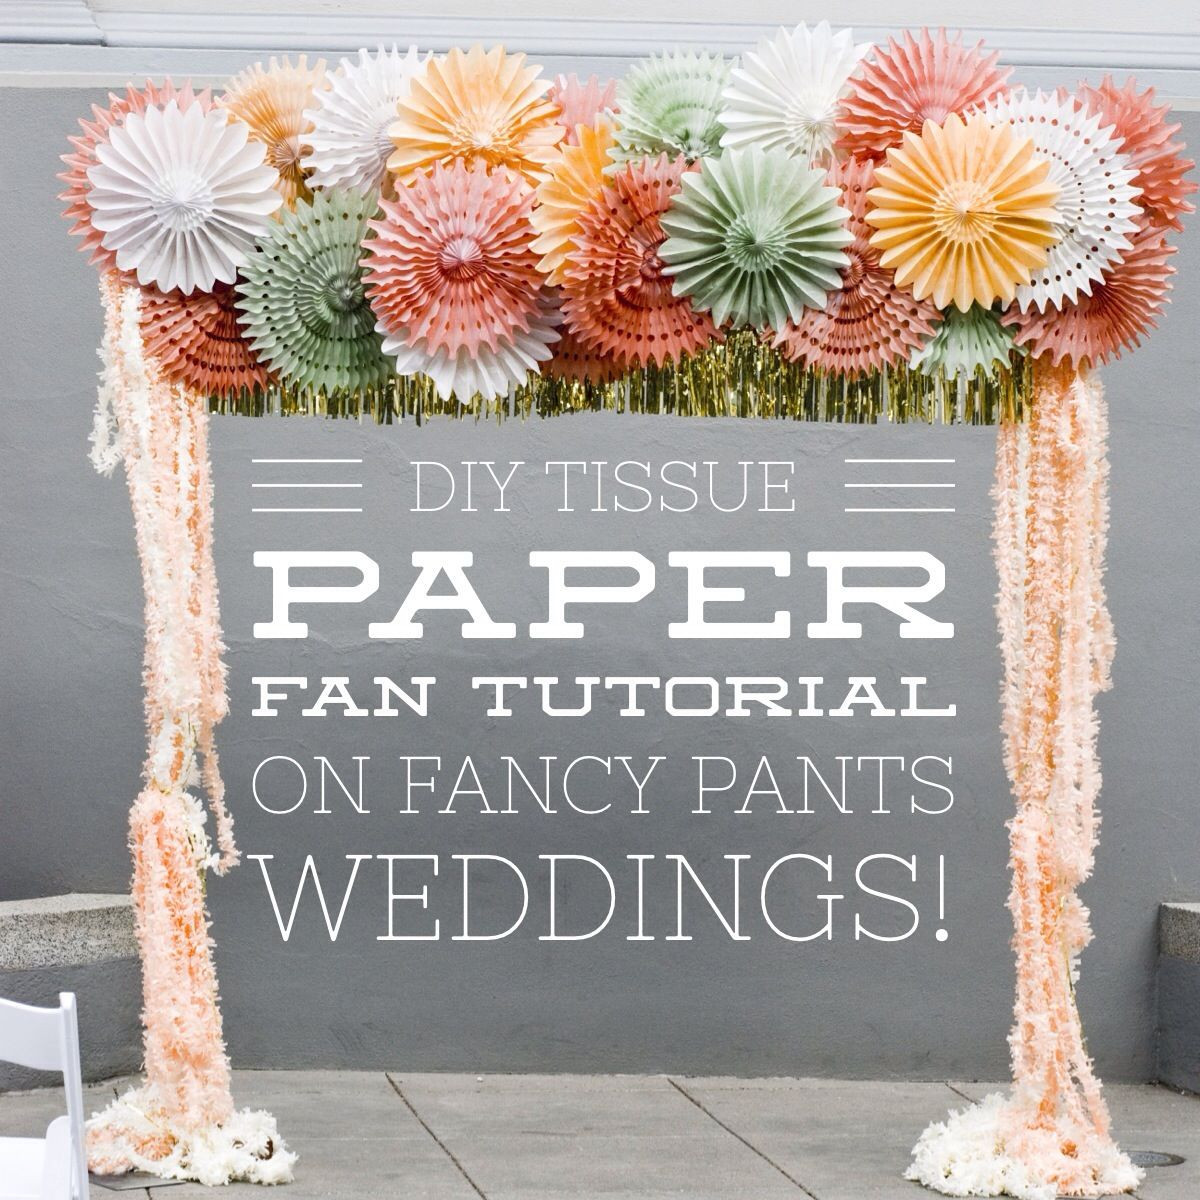 DIY Wedding Arch Tutorial
 DIY Paper Fan Tutorial